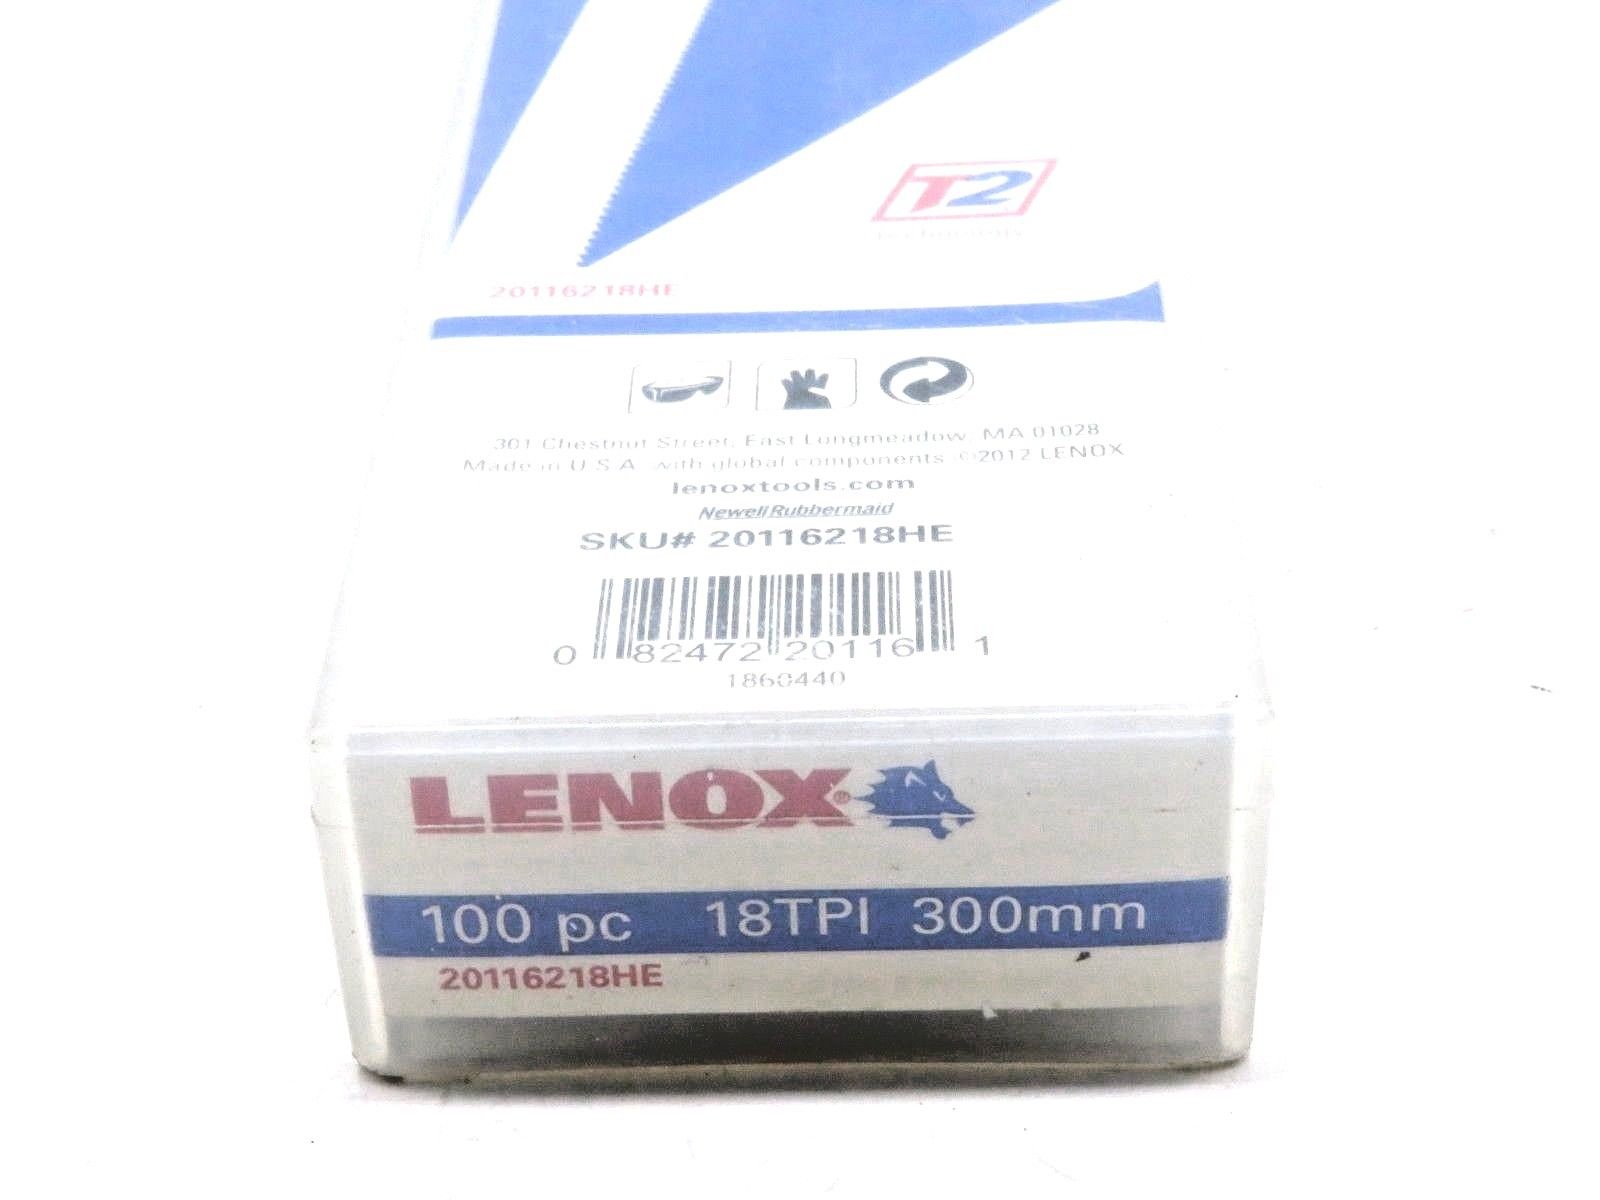 PC 100 HACKSAW 20116218HE SB LENOX BLADES - Supply, Industrial NEW